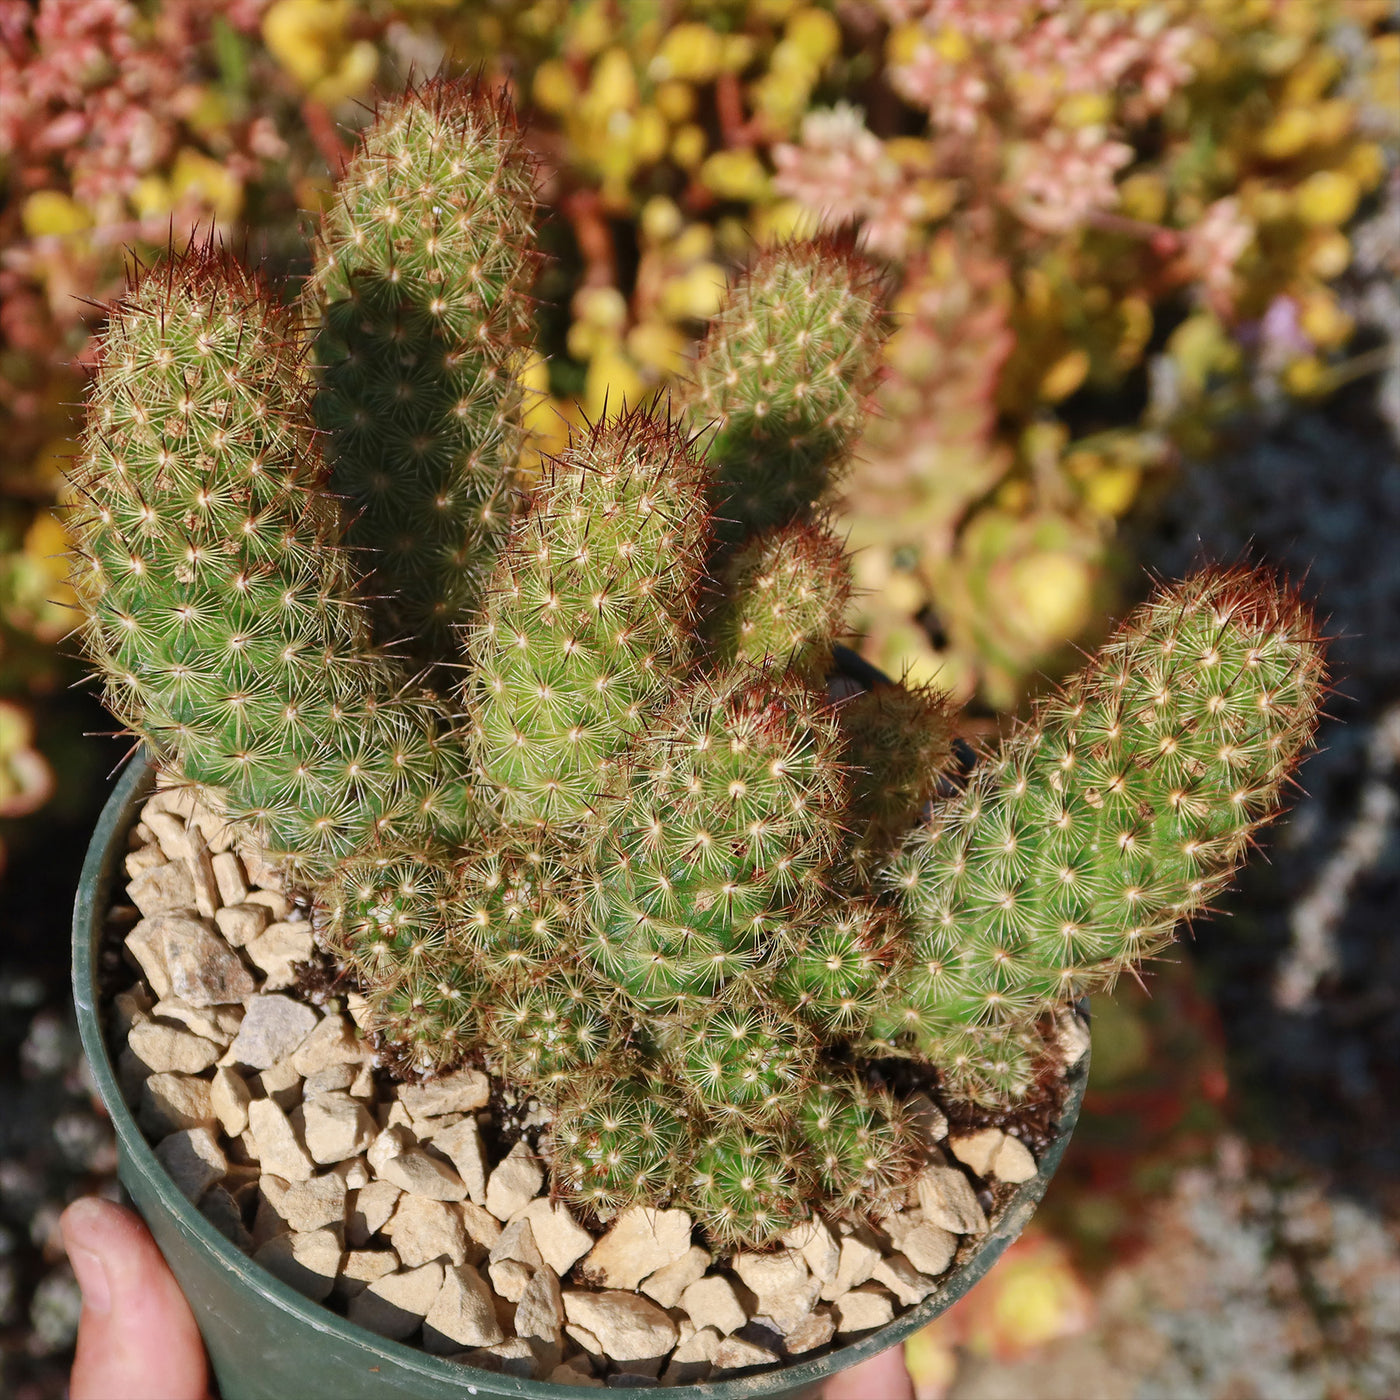 Copper King Cactus - Mammillaria elongata ‘Copper King’